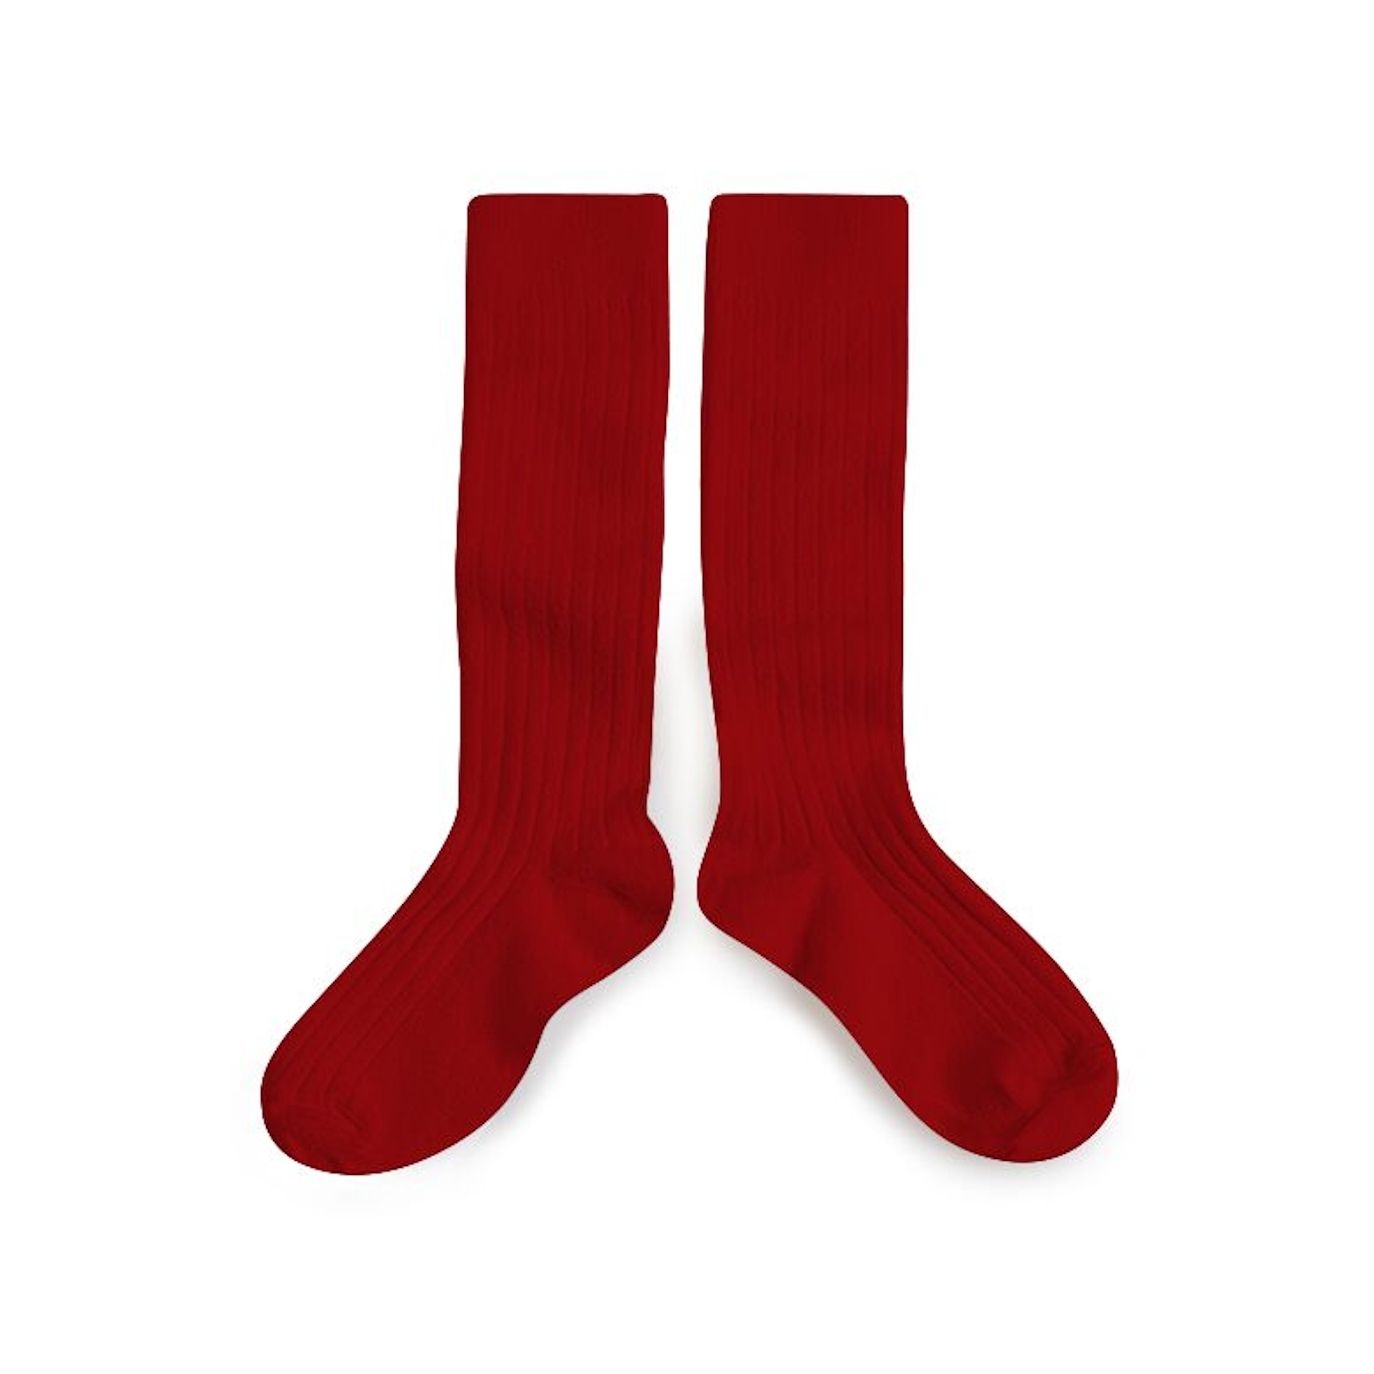 Collégien Knee high socks La Haute rouge carmin 2950 273 La